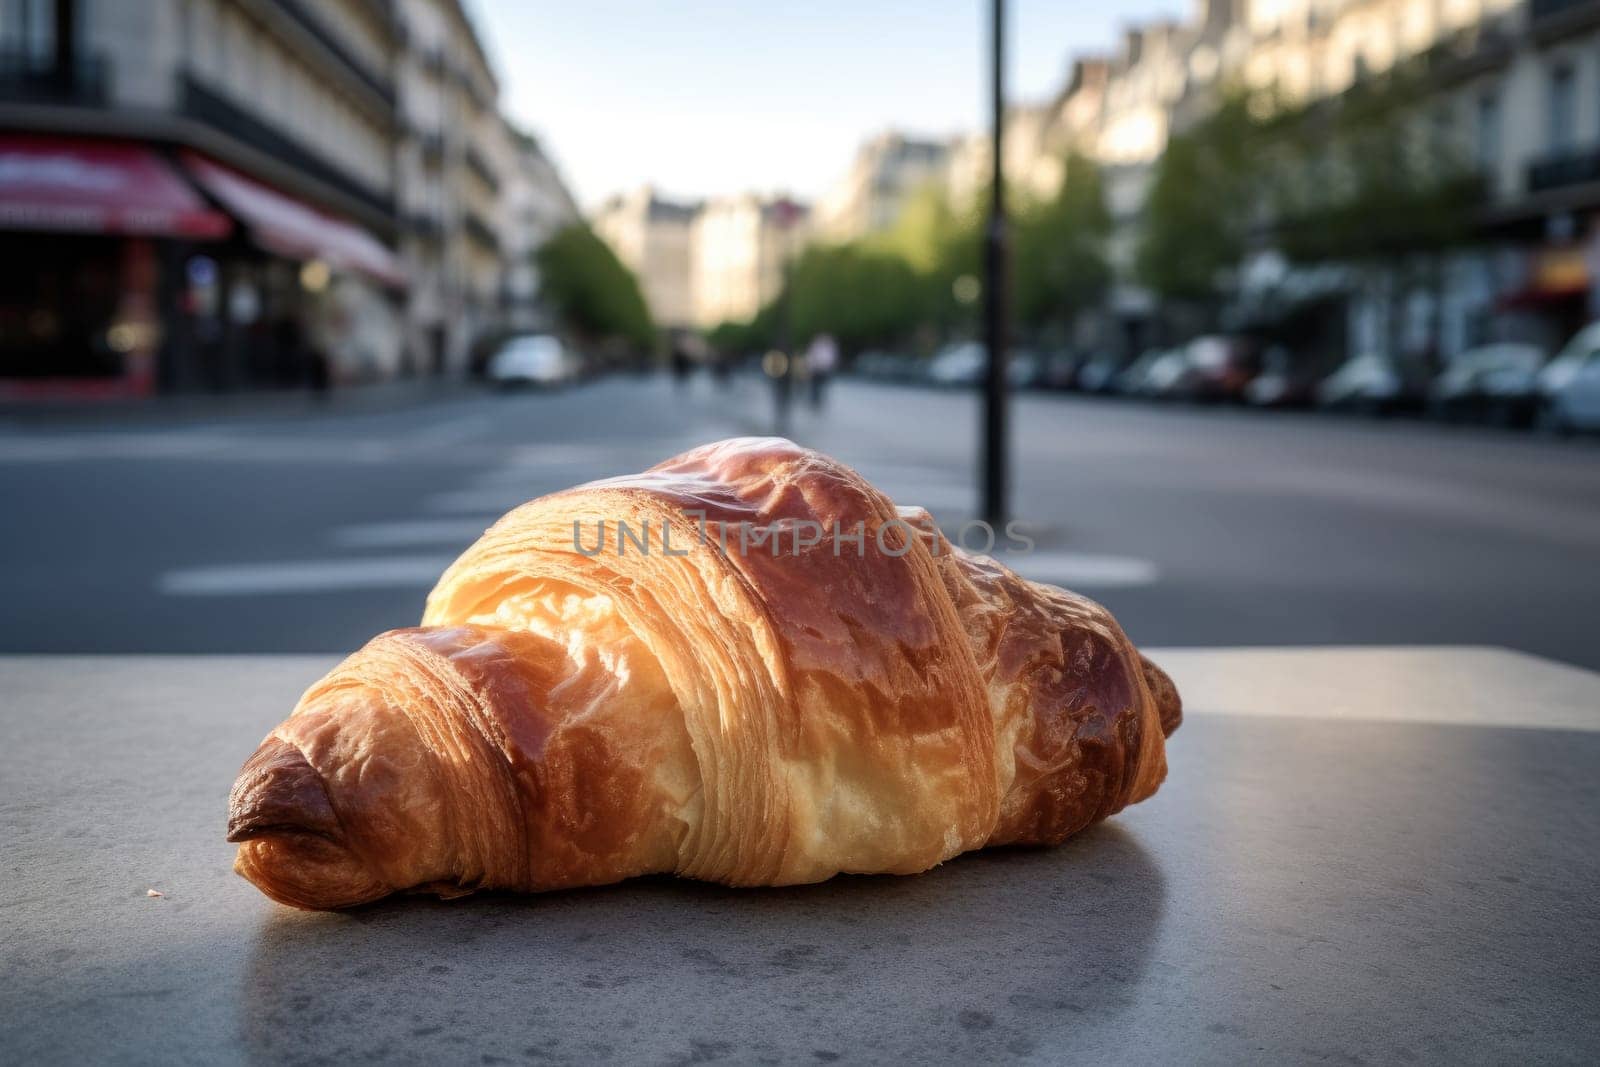 Paris croissant cafe. French butter. Generate Ai